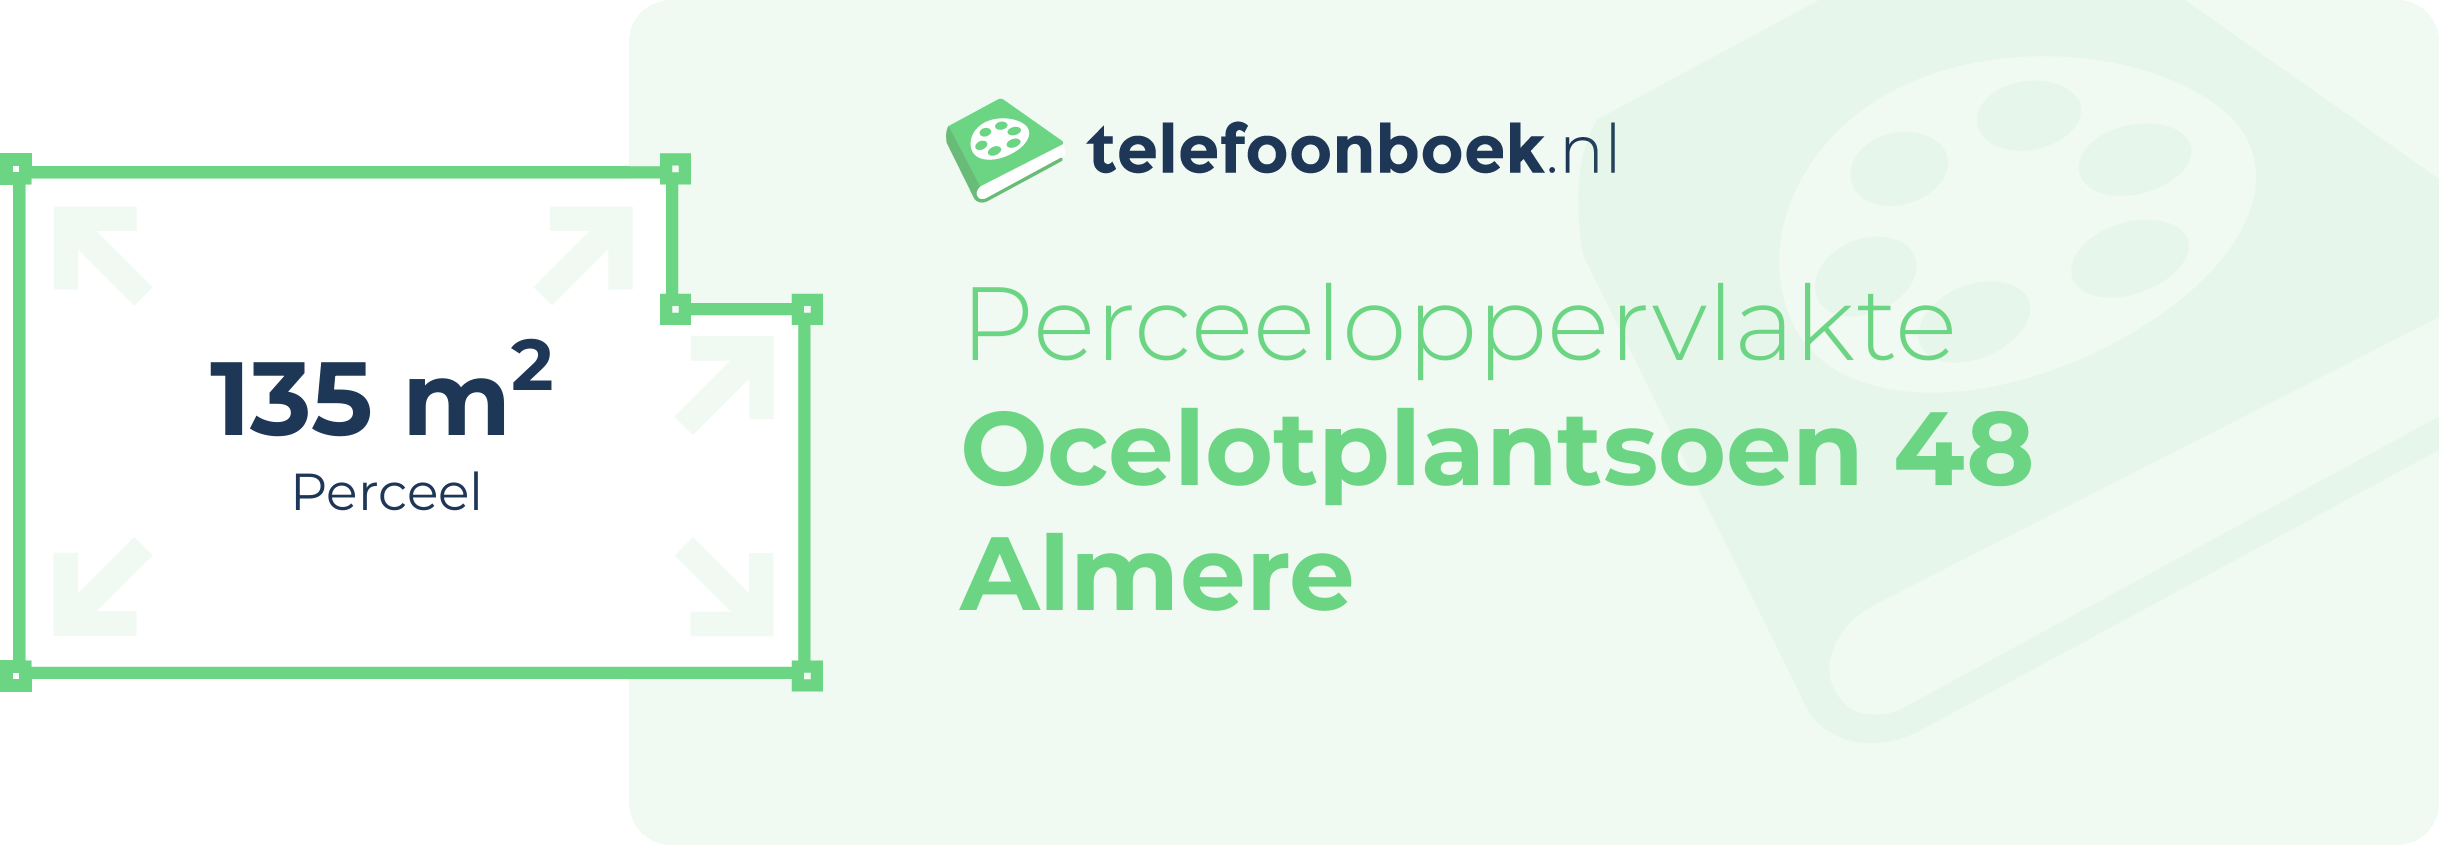 Perceeloppervlakte Ocelotplantsoen 48 Almere